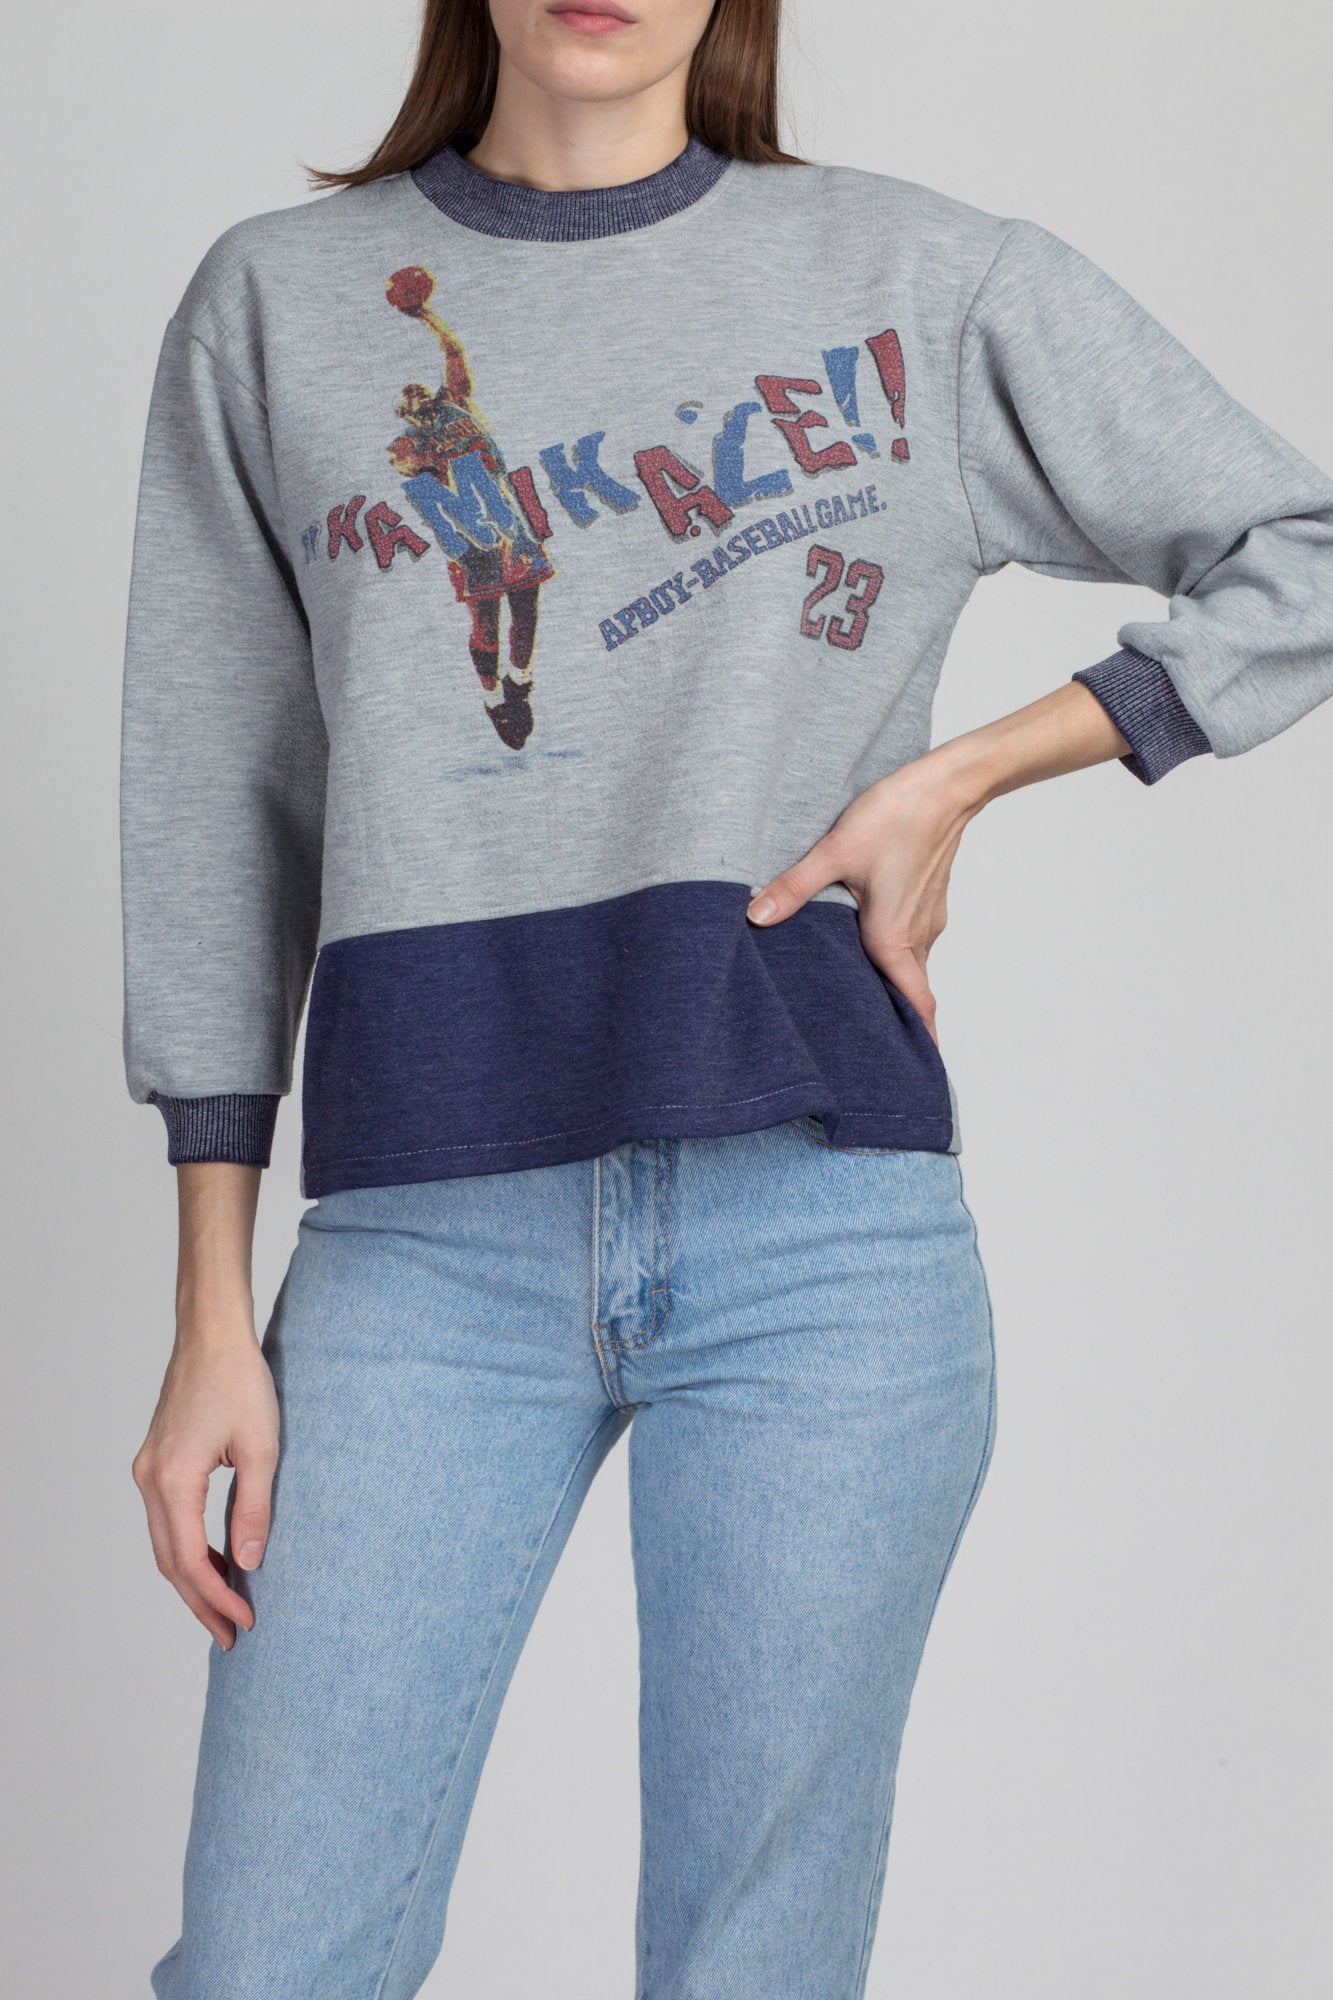 90s Kamikaze Basketball Sweatshirt - Medium 